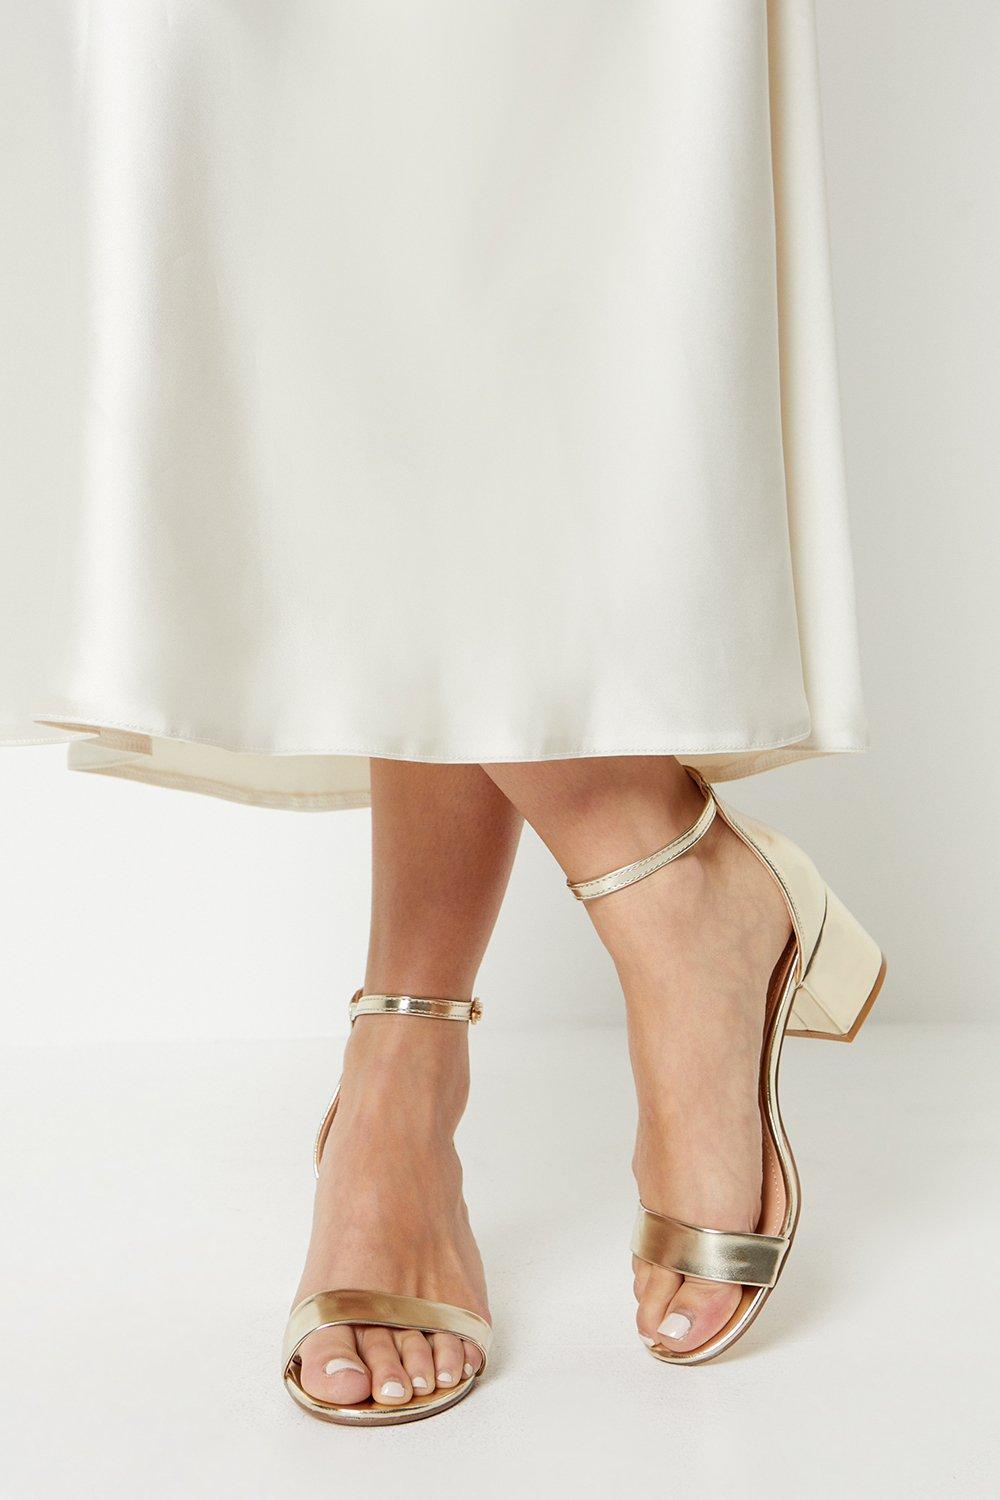 Thelma Ankle Strap Medium Block Heeled Sandals - Gold